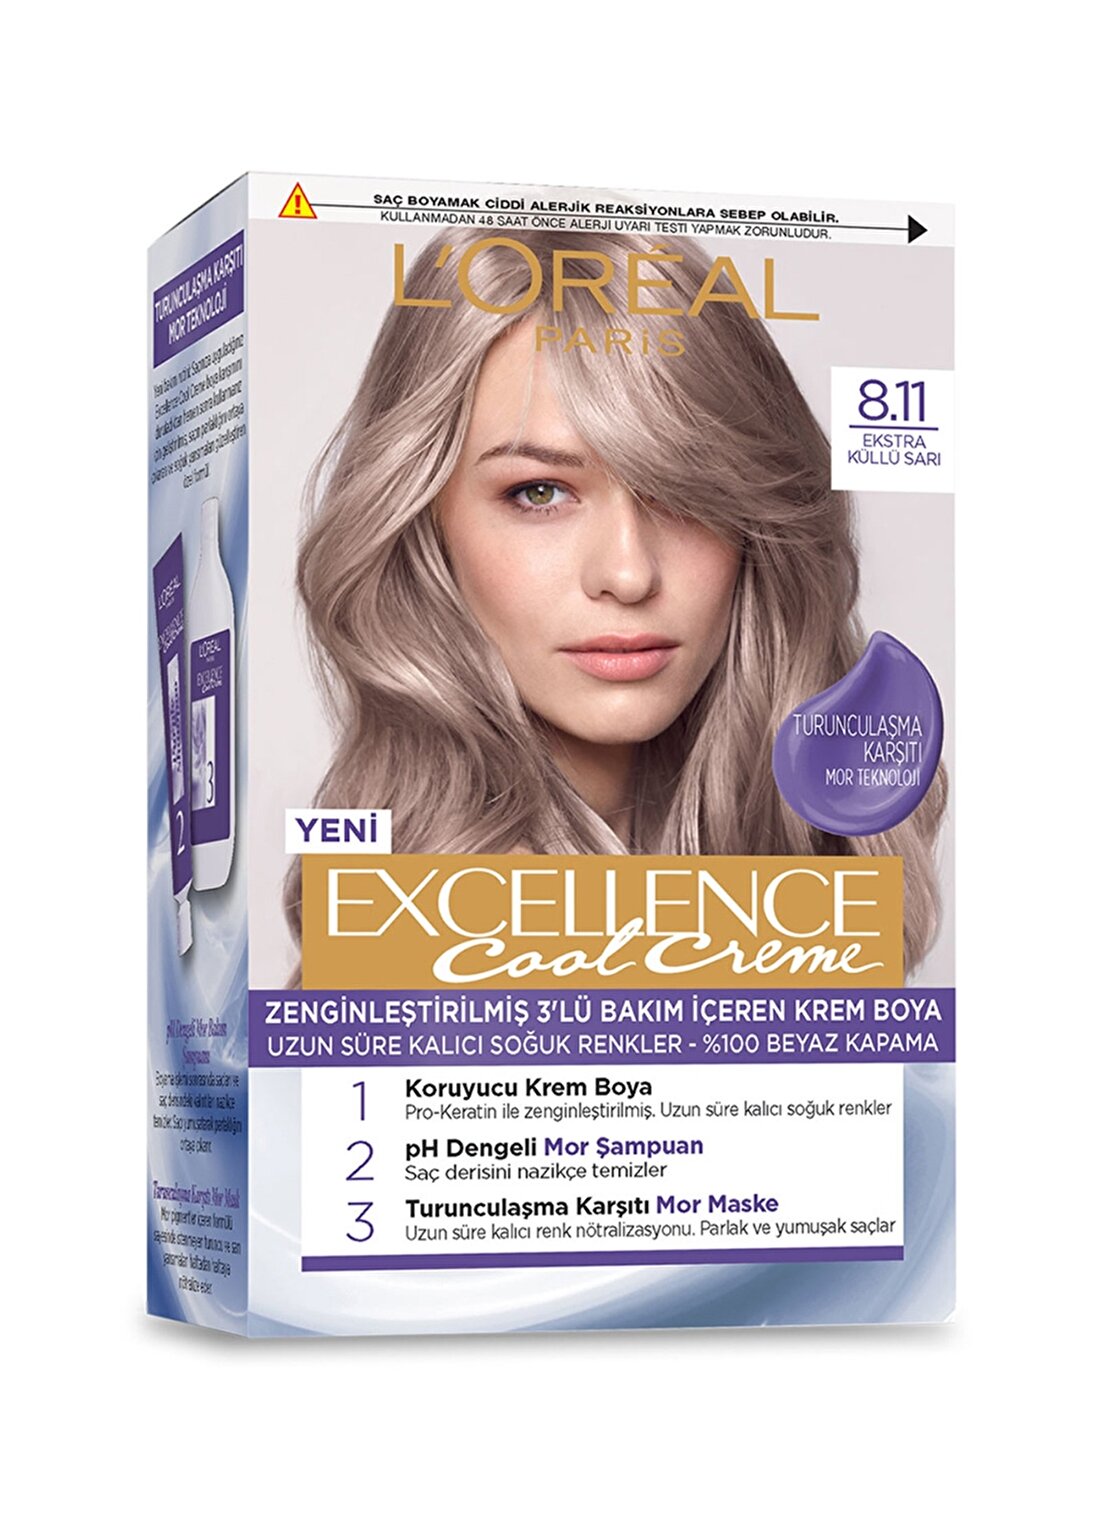 L’Oréal Paris Excellence Cool Creme Saçboyası – 8.11 Ekstra Küllü Sarı